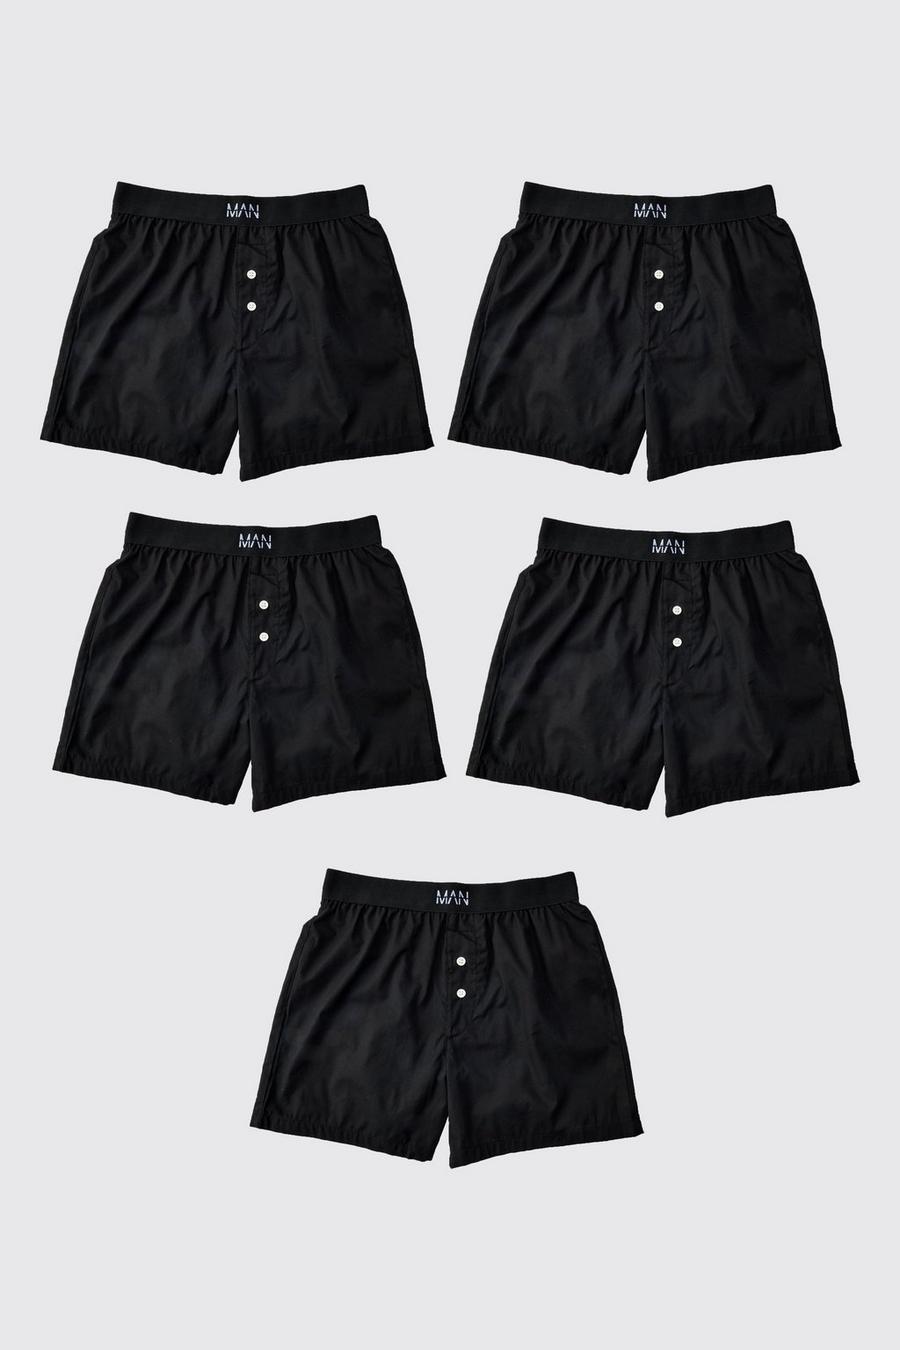 Black Original Man Geweven Boxer Shorts (5 Stuks)